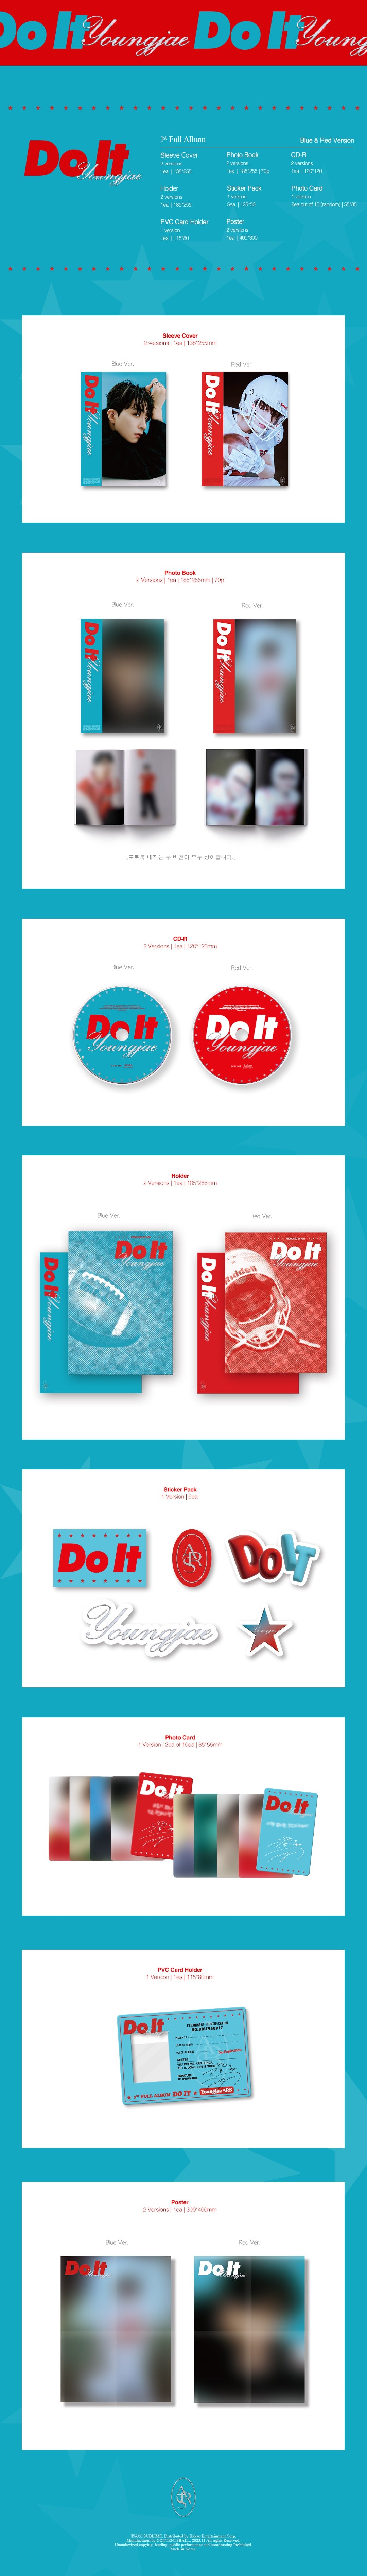 K-Pop CD Youngjae - 1at Album 'Do It'